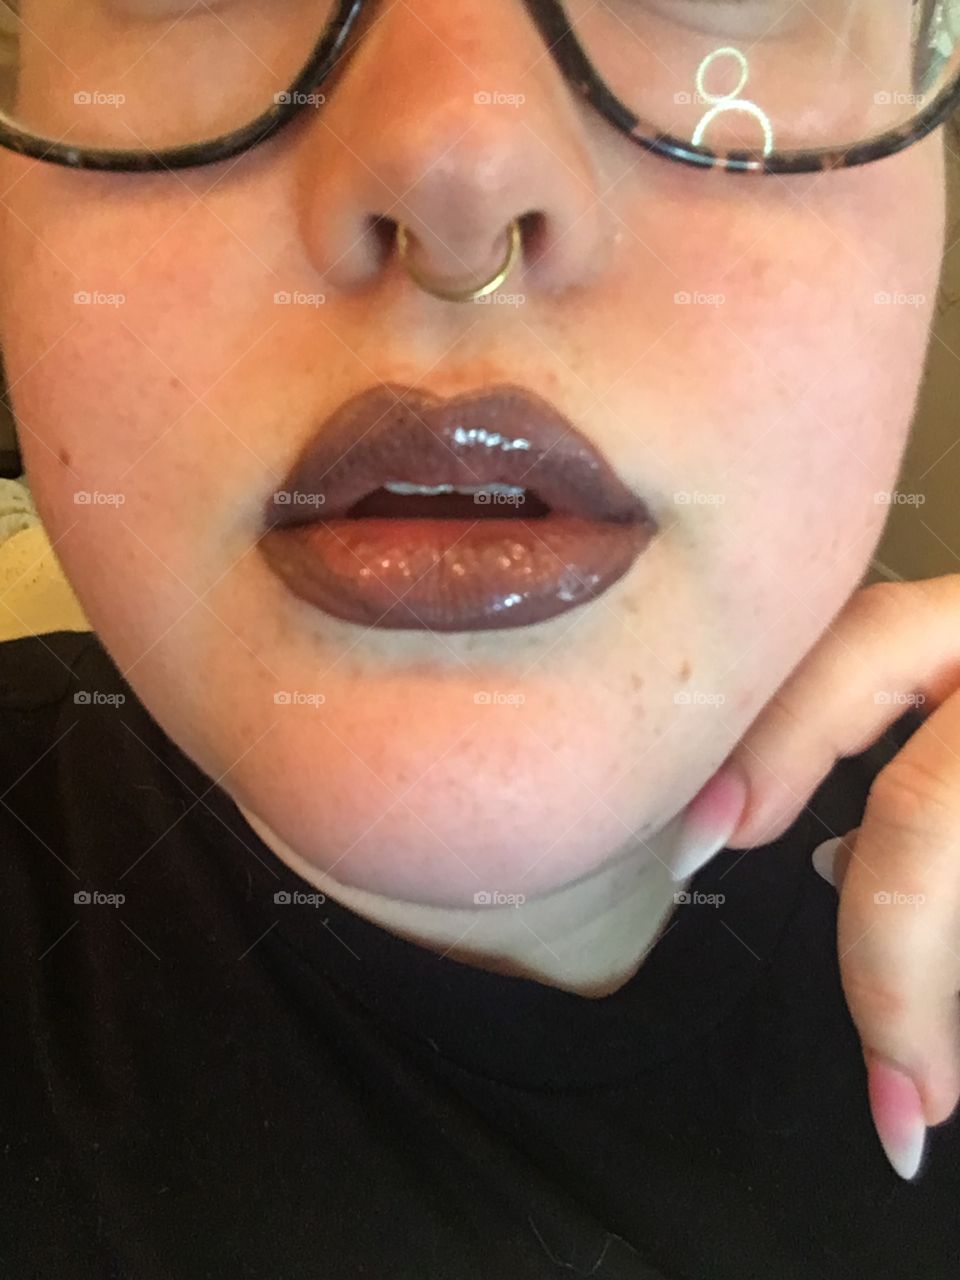 Lips ombré septum nose ring pout makeup lipstick gloss LipSense senegence woman